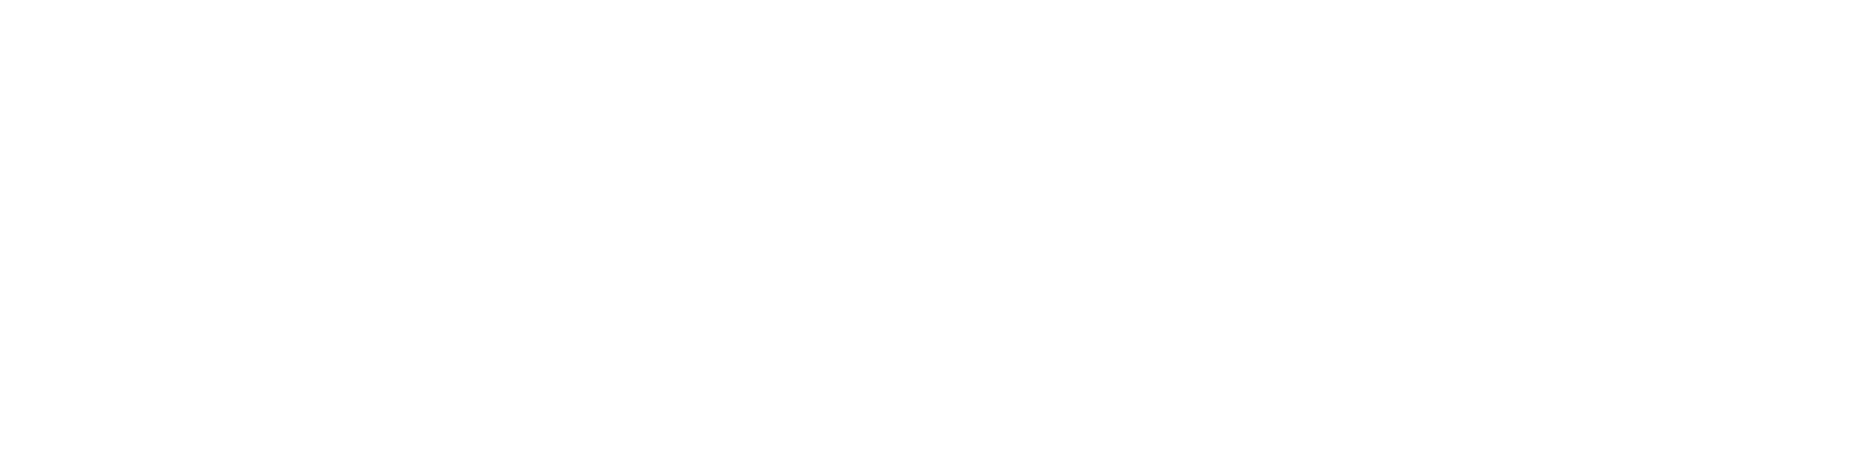 Cumberland-Villages-logo-white